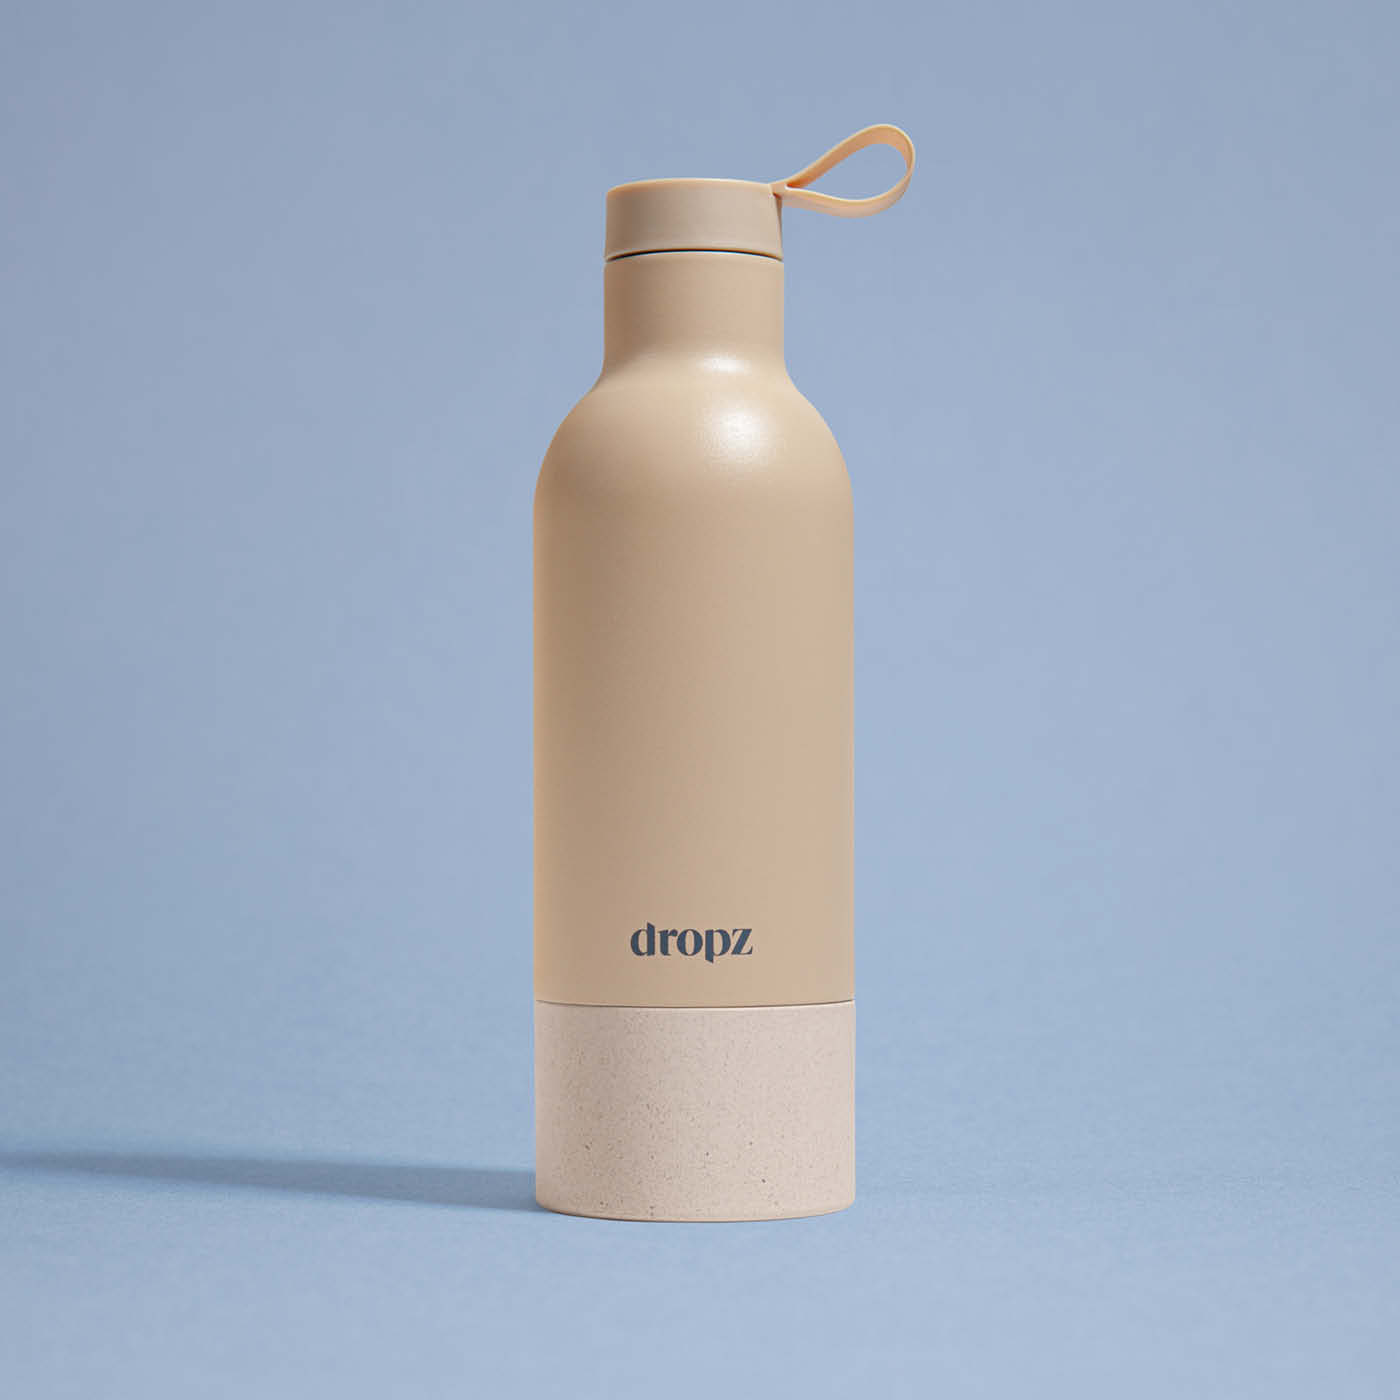 dropz Bottle beige - 0.5L with storage compartment